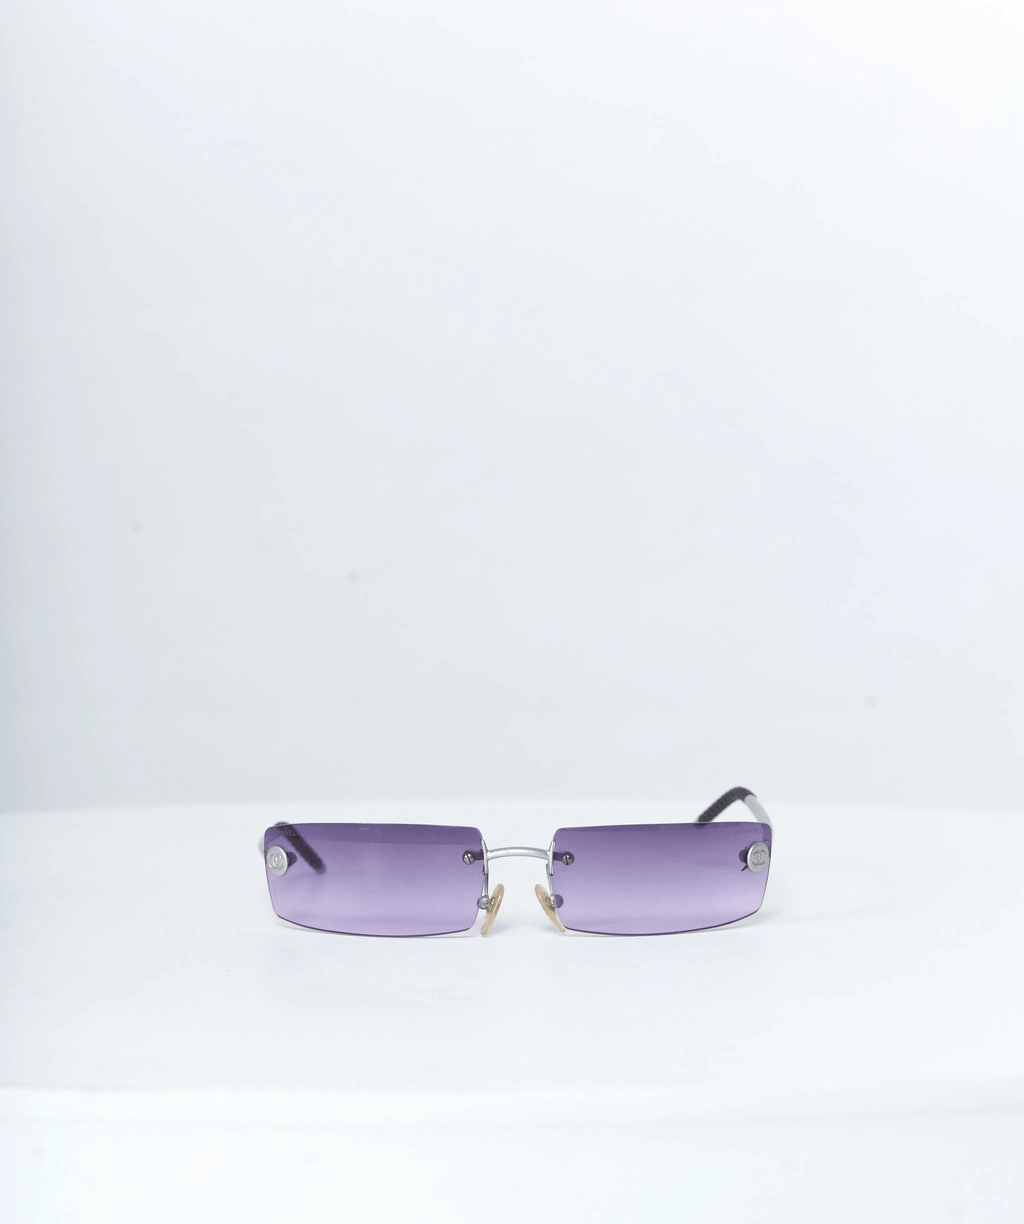 Chanel Vintage 2005 Sunglasses - Purple Sunglasses, Accessories - CHA680539